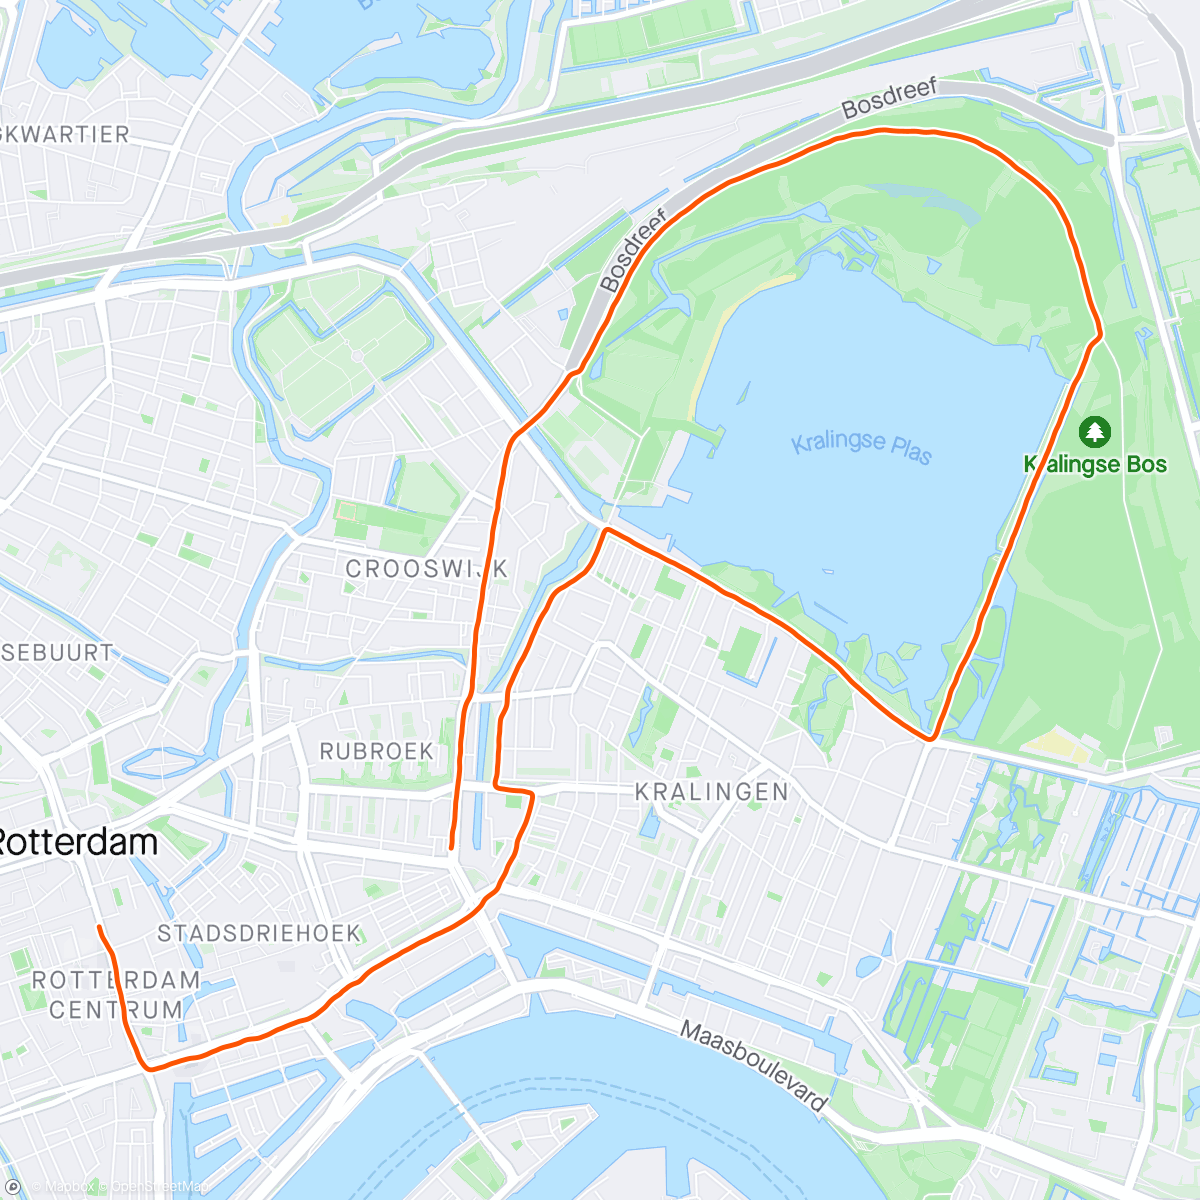 Mappa dell'attività 1/4 marathon Rdam - kippenvel op de Coolsingel🔥🔥🔥 #demooiste